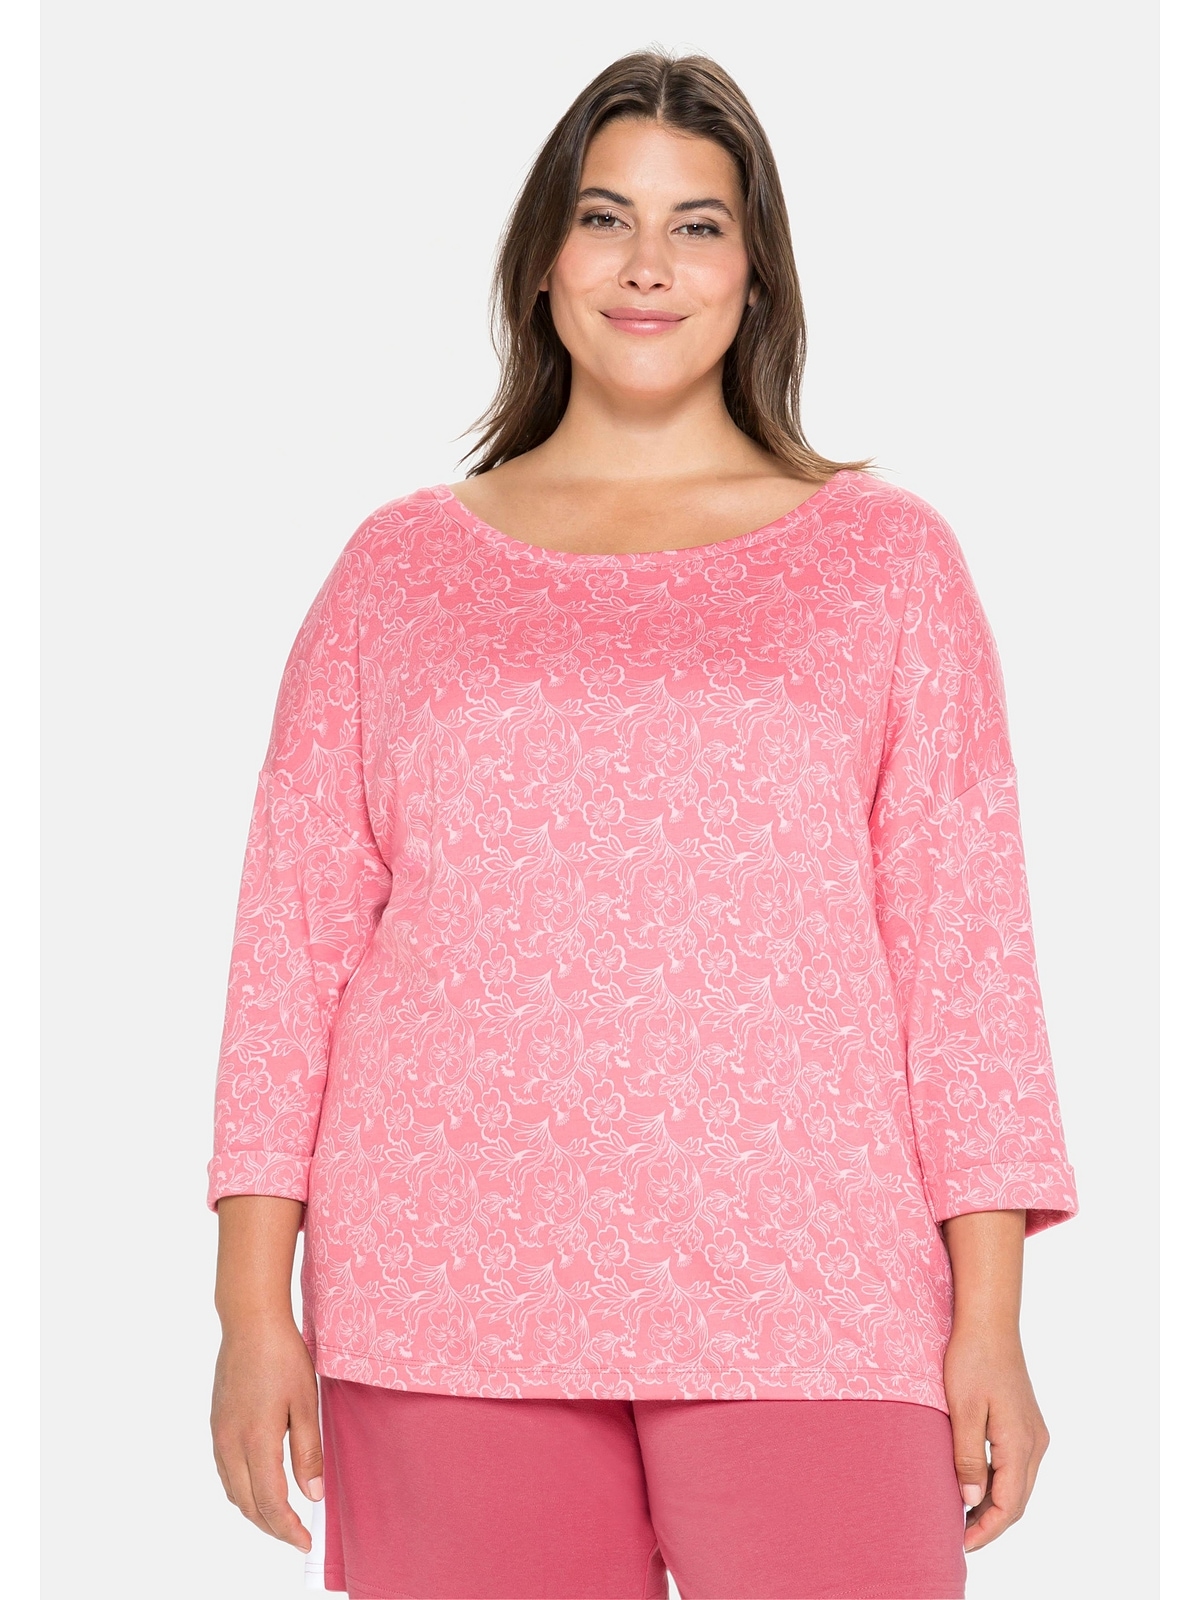 [Teures Material] Sheego Sweatshirt Mix in Oversized-Form Große aus Größen legerer Baumwoll-Modal